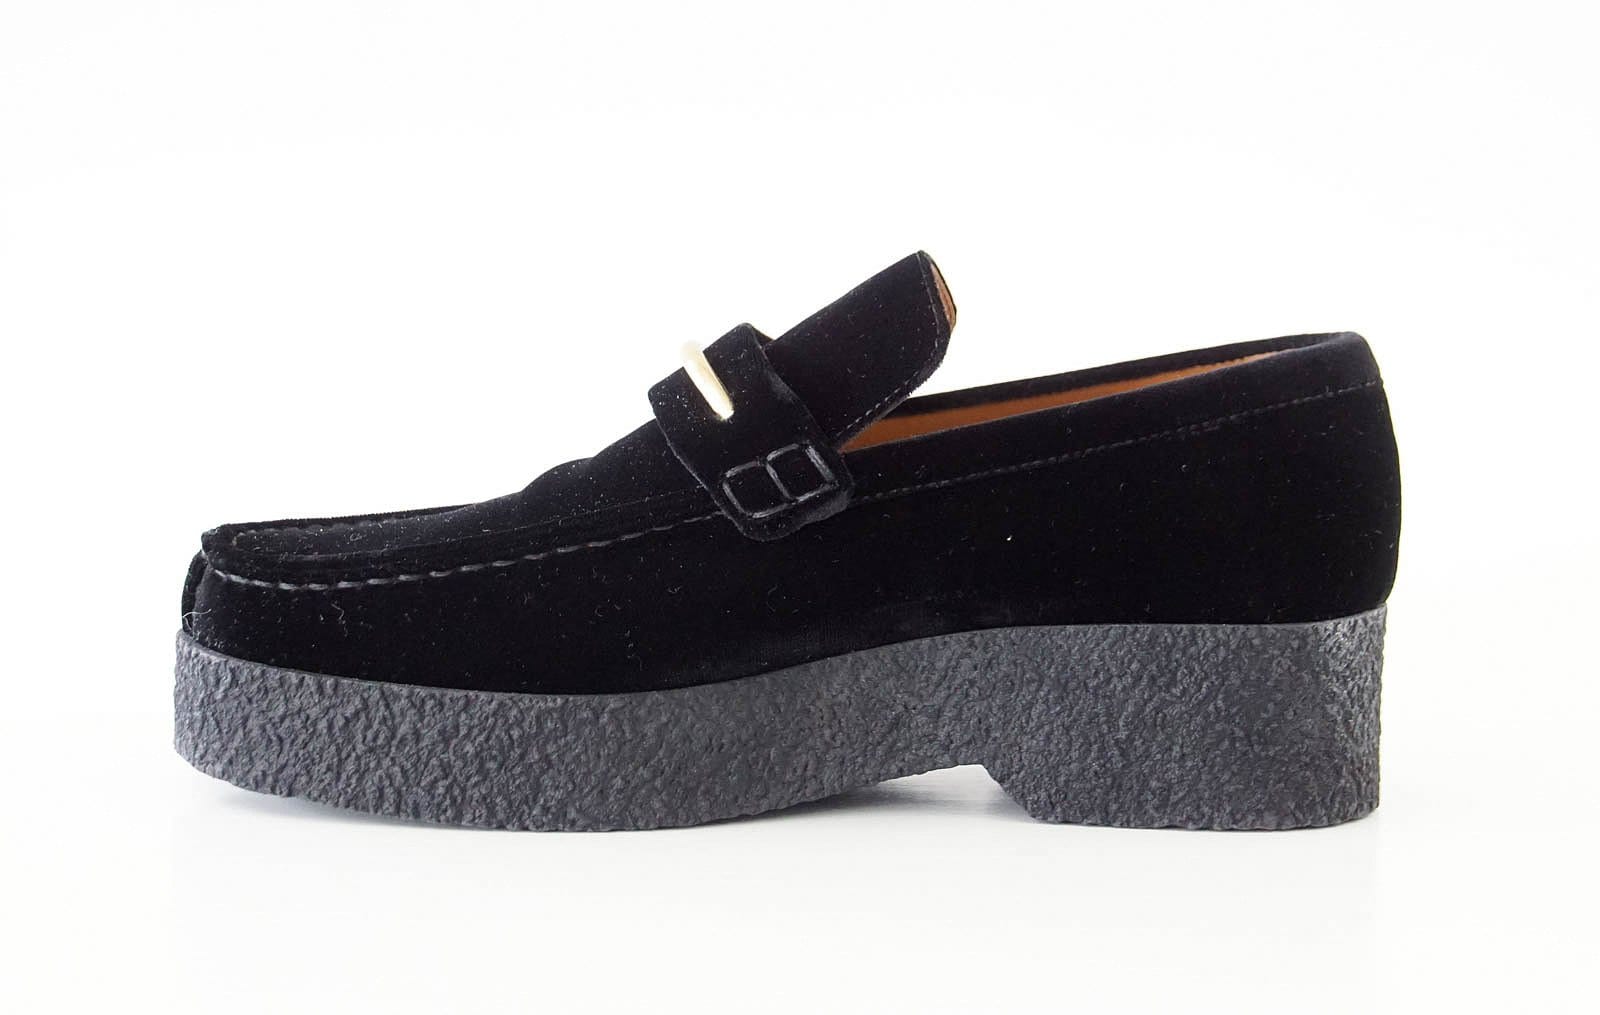 Celine Shoe Sleek Black Velvet Platform Loafer 39 / 9 New - mightychic